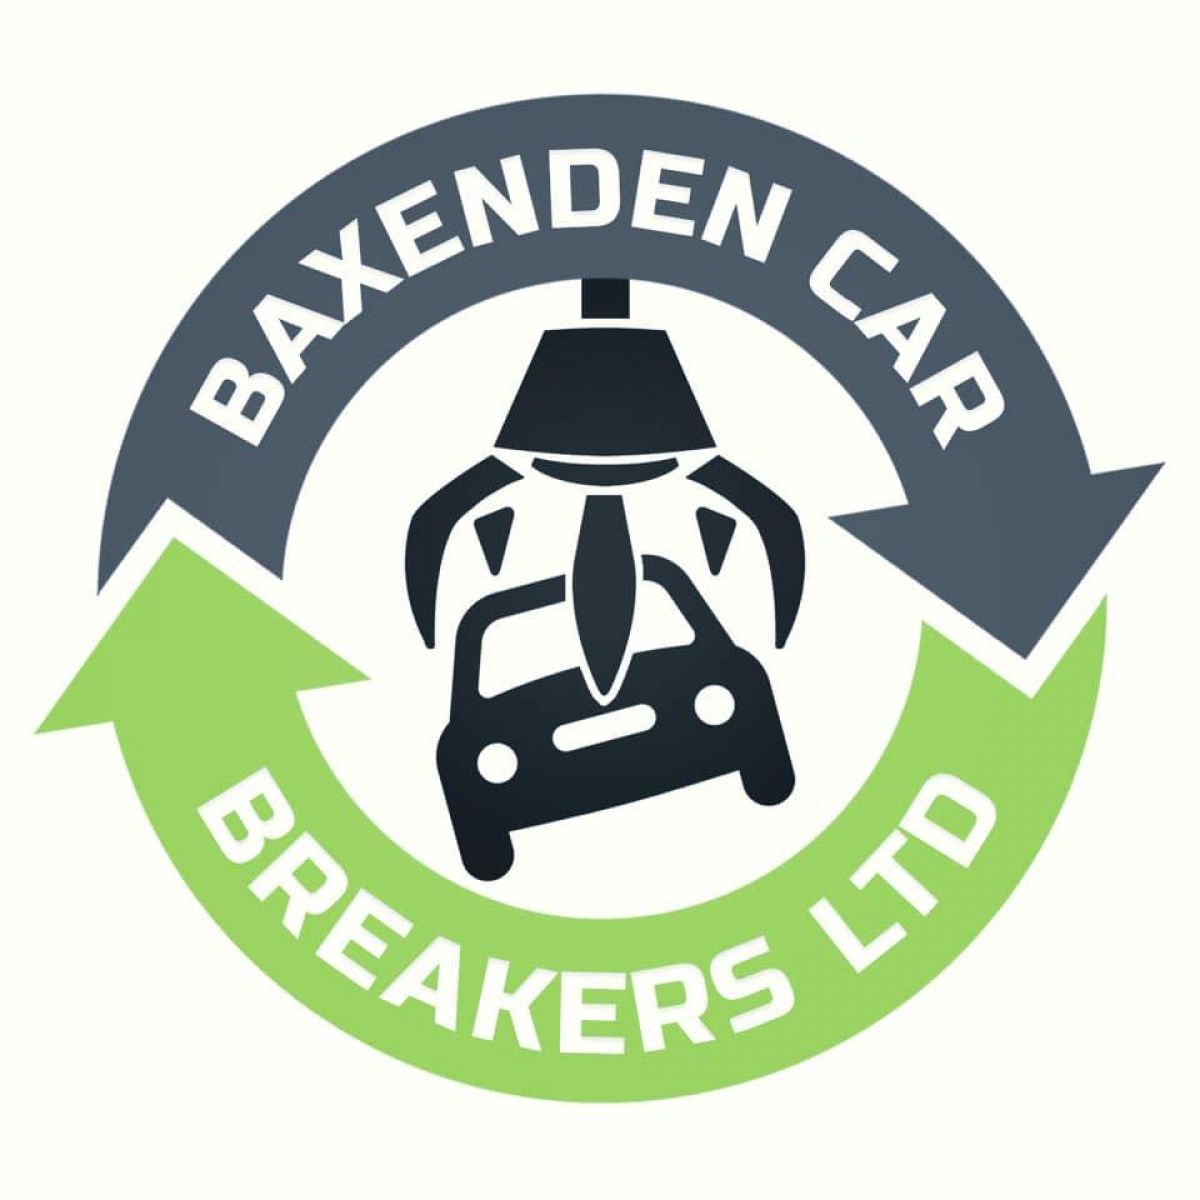 Baxenden Car Breakers LTD, Accrington, England